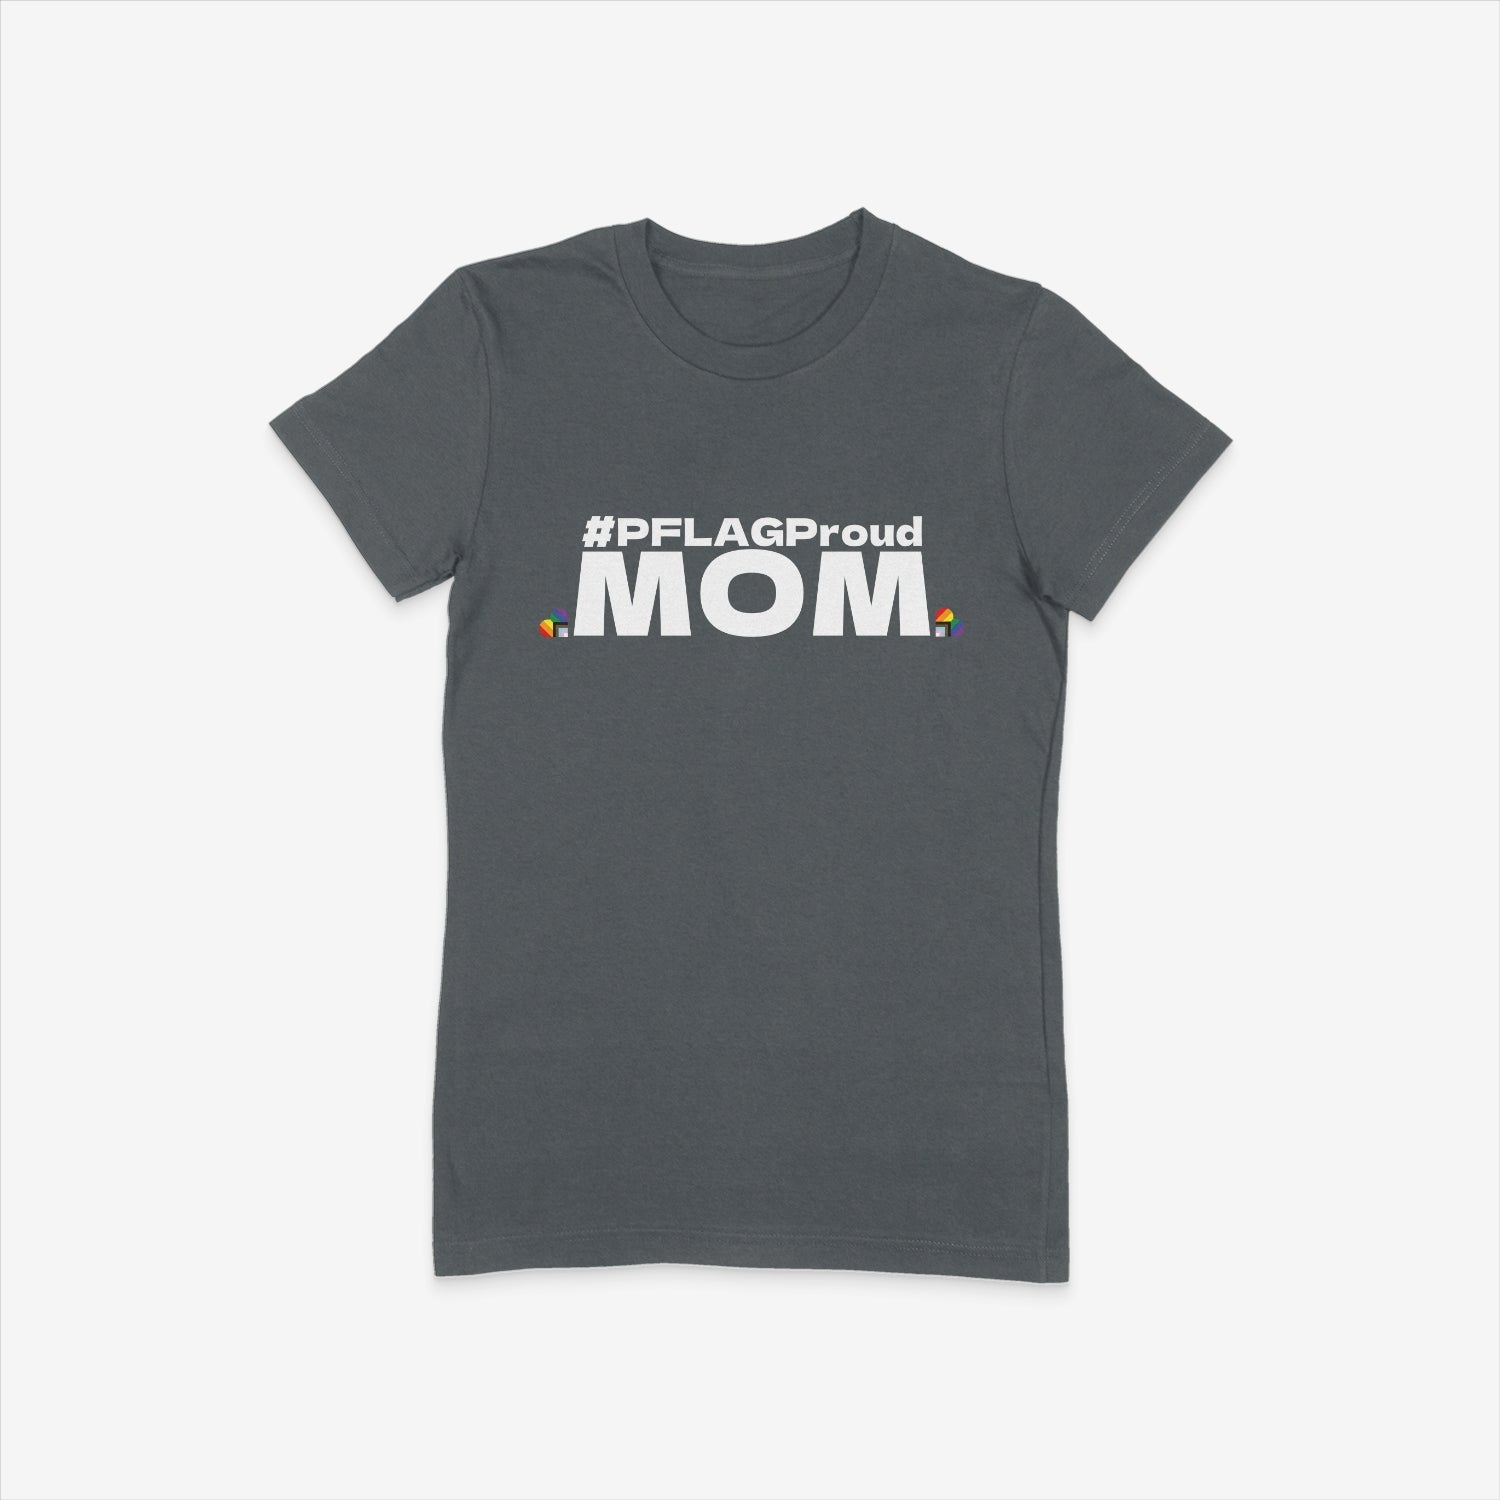 #PFLAGProud Mom - Fitted-Cut Crewneck Short Sleeve T-Shirt